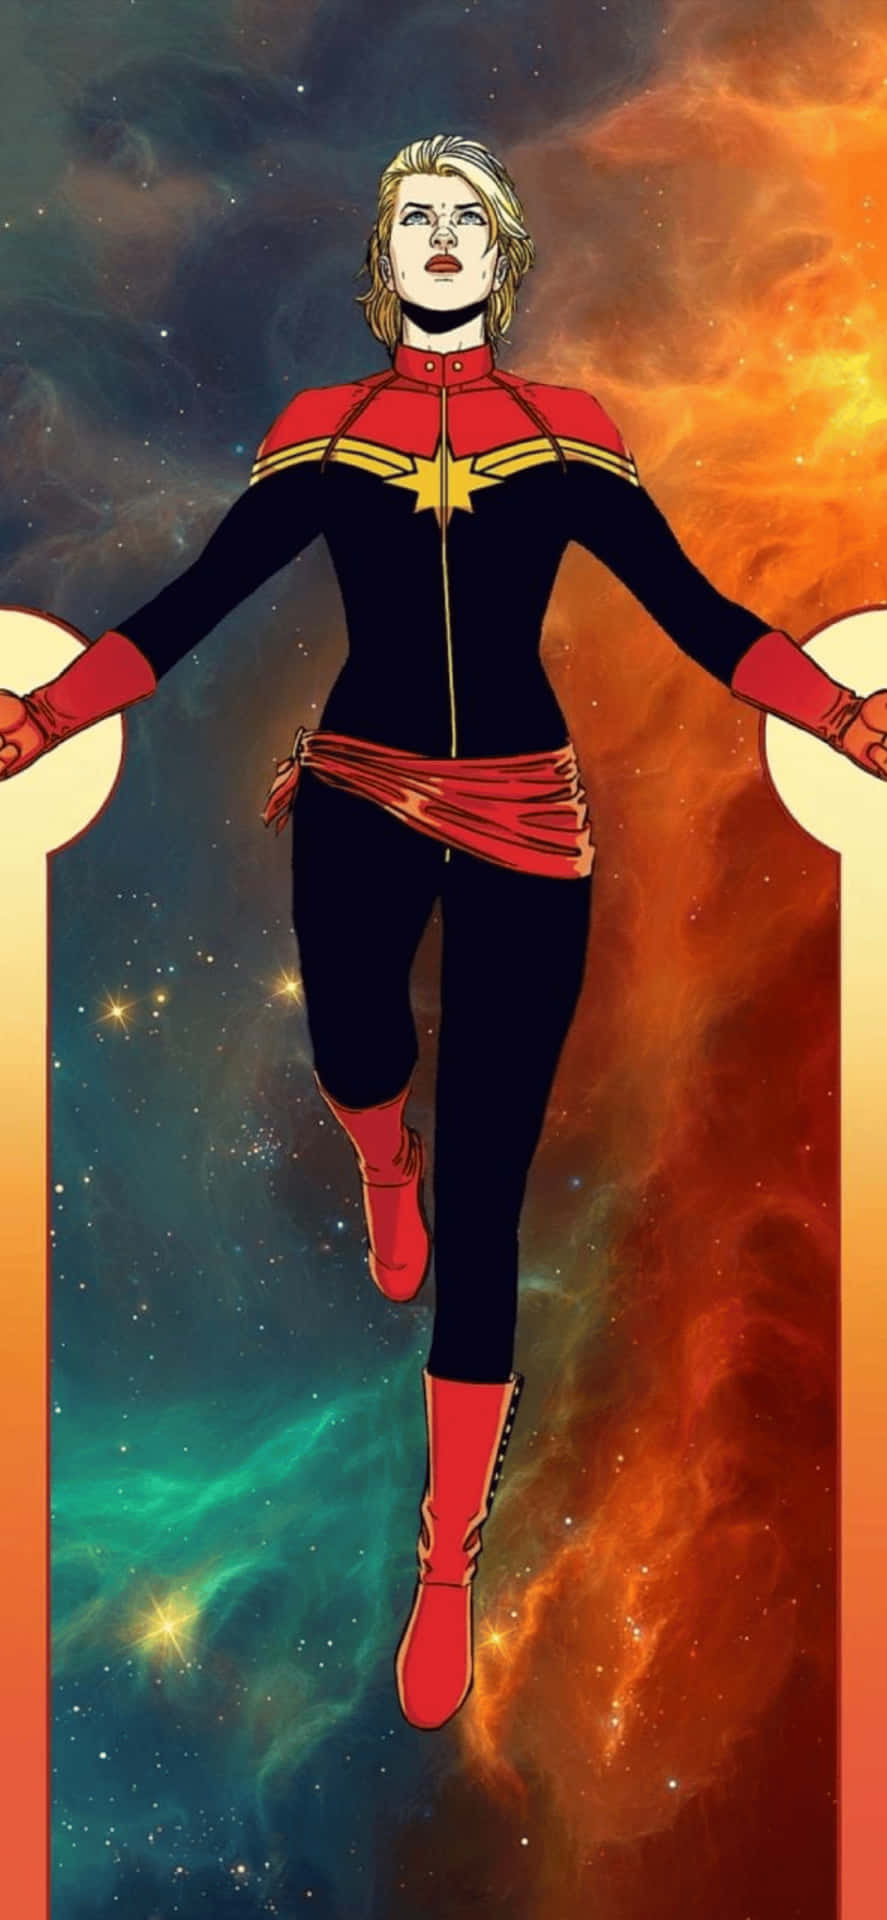 Iphonexs Max Marvel Captain Marvel Bakgrund.